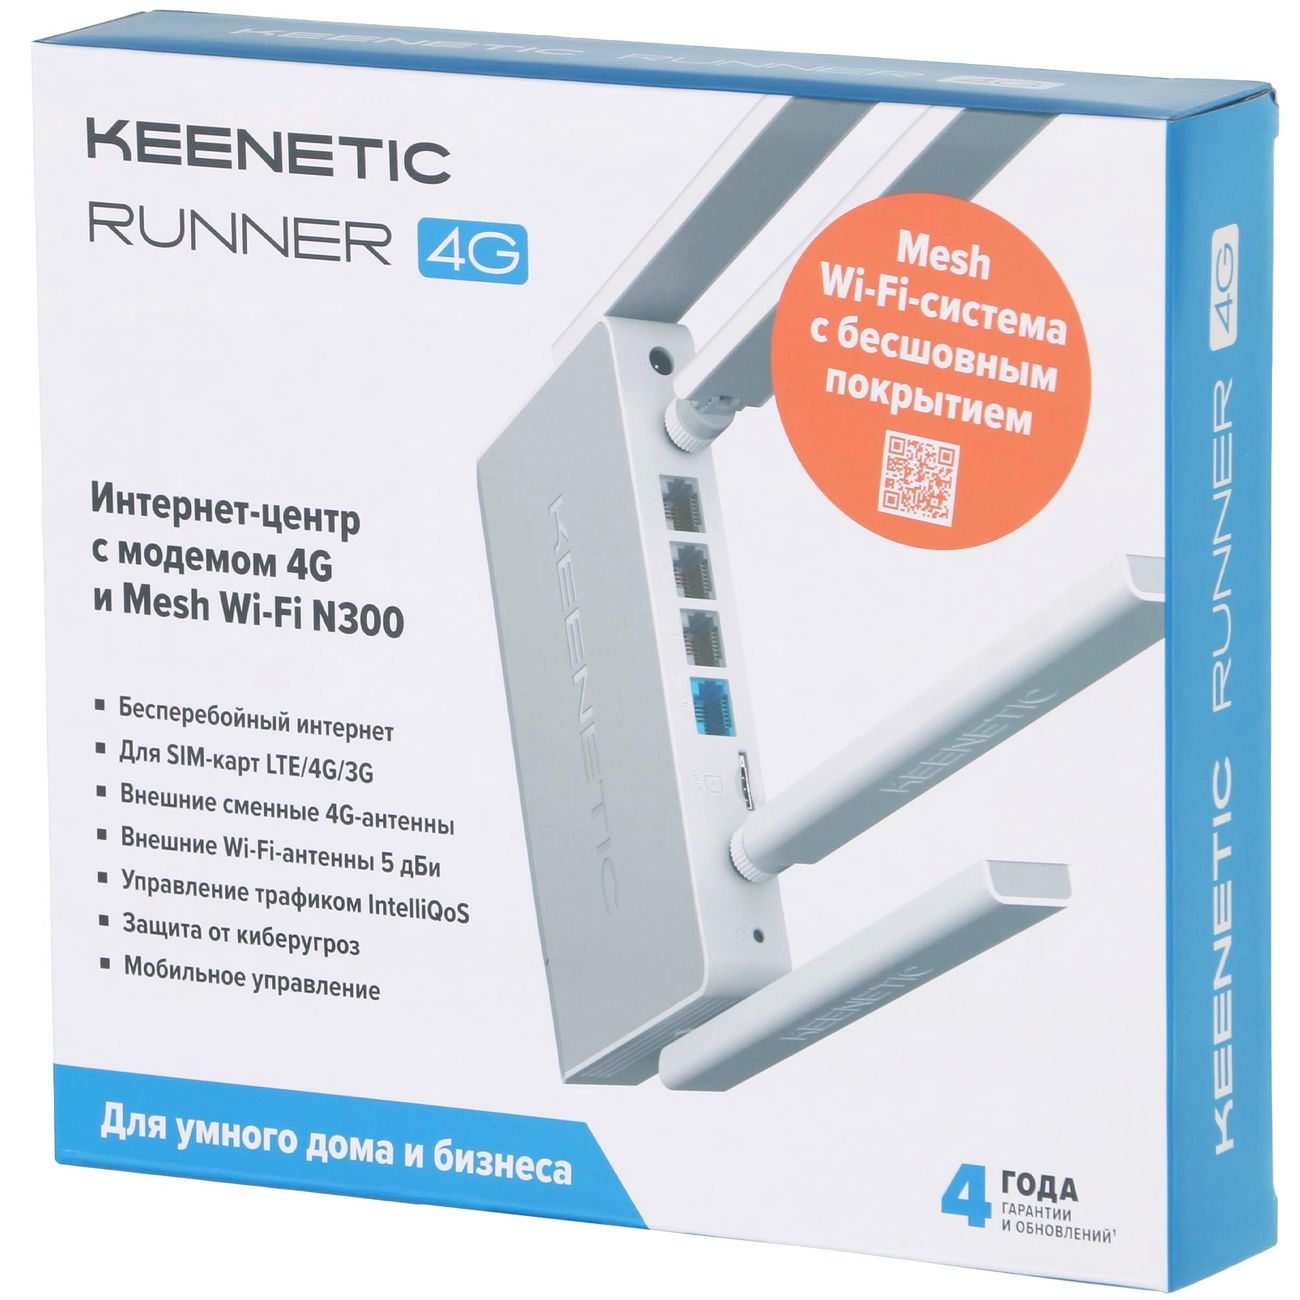 WI-FI роутер Keenetic Runner 4G KN-2211 Интернет-центр с модемом 4G/3G, Mesh Wi-Fi N300 и 4-портовым